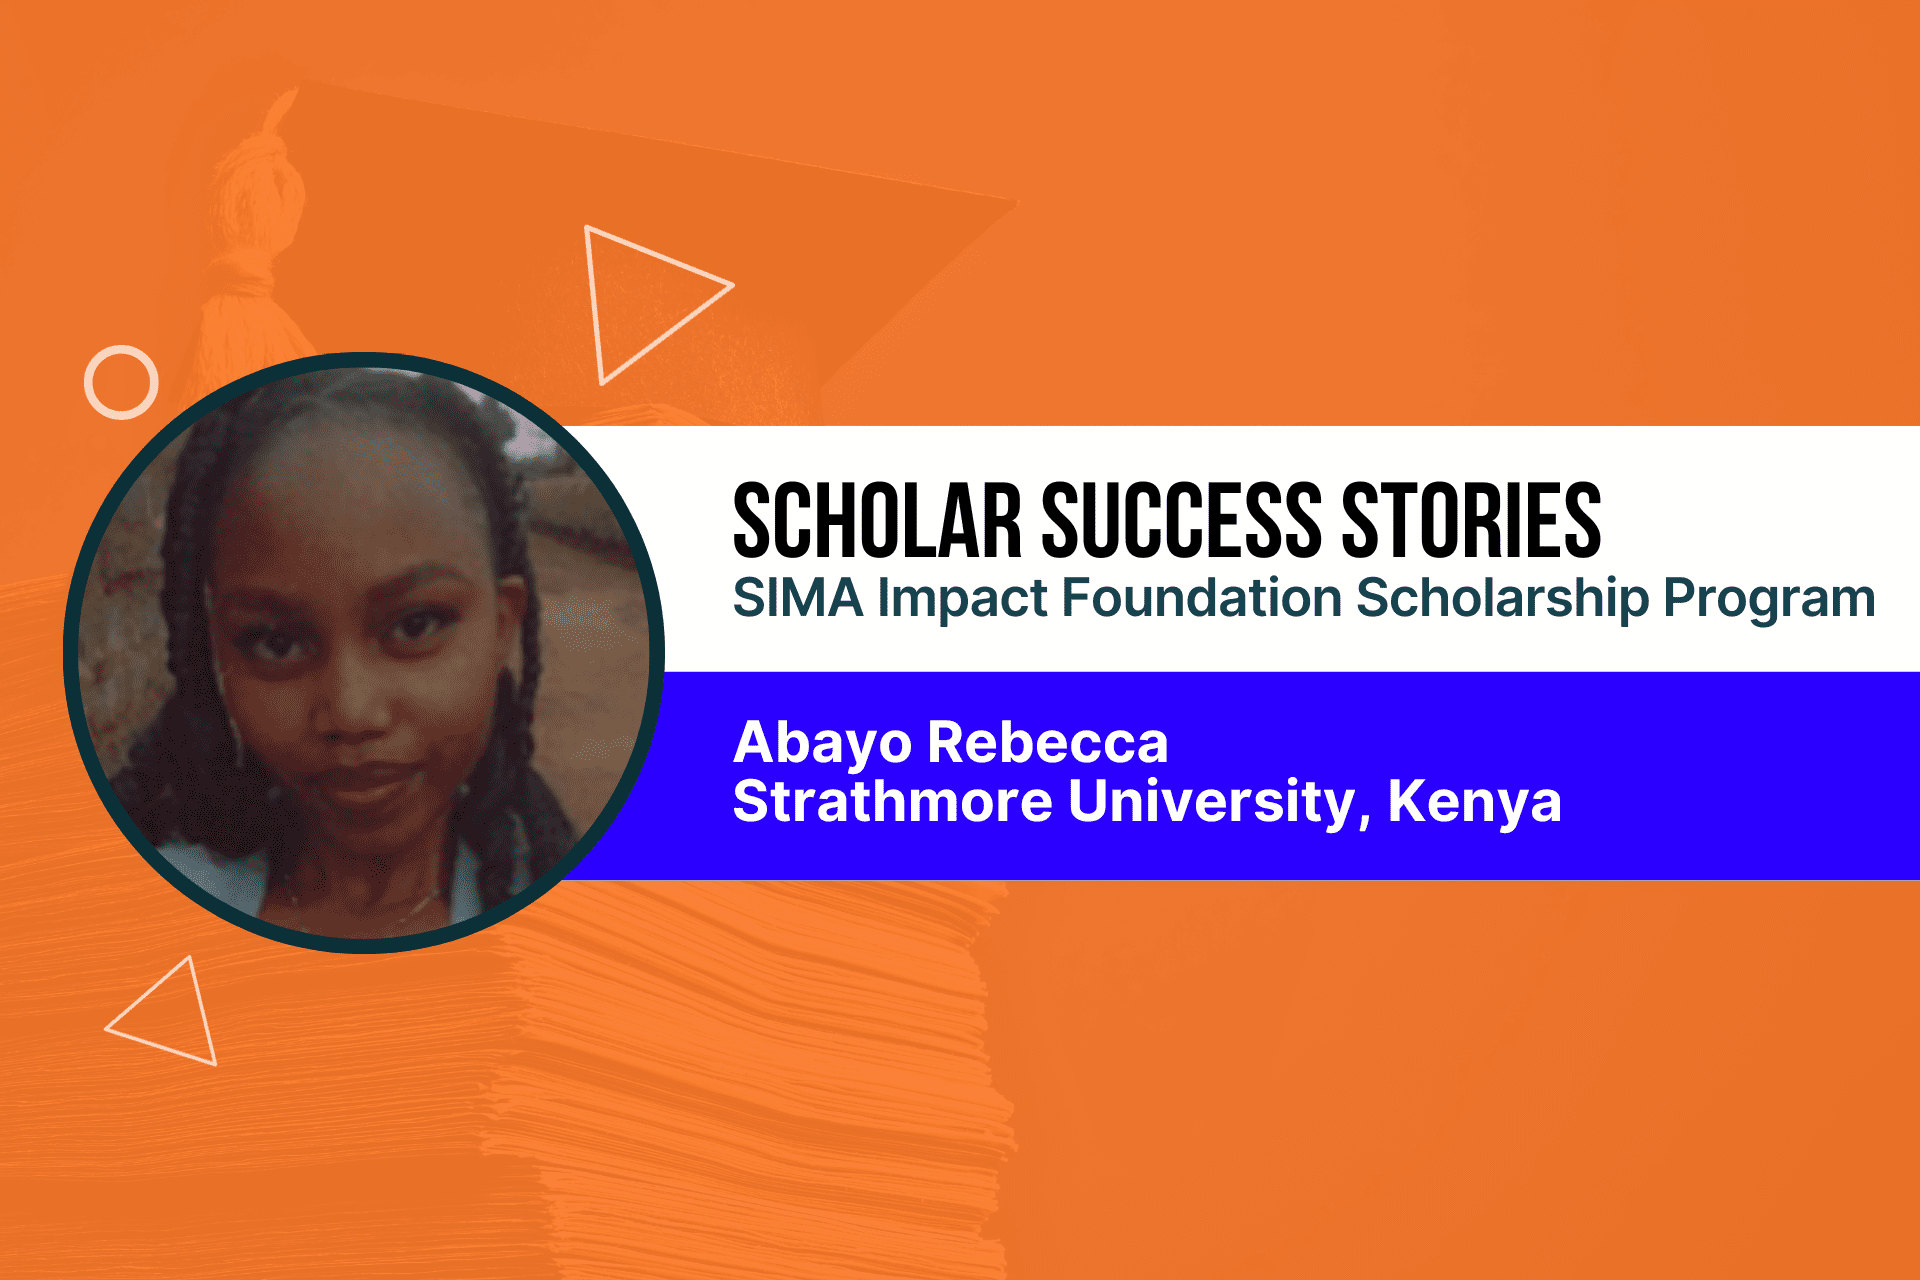 Scholars’ Success Stories 3: Unveiling the Impact of the SIMA Impact Foundation Scholarship Program